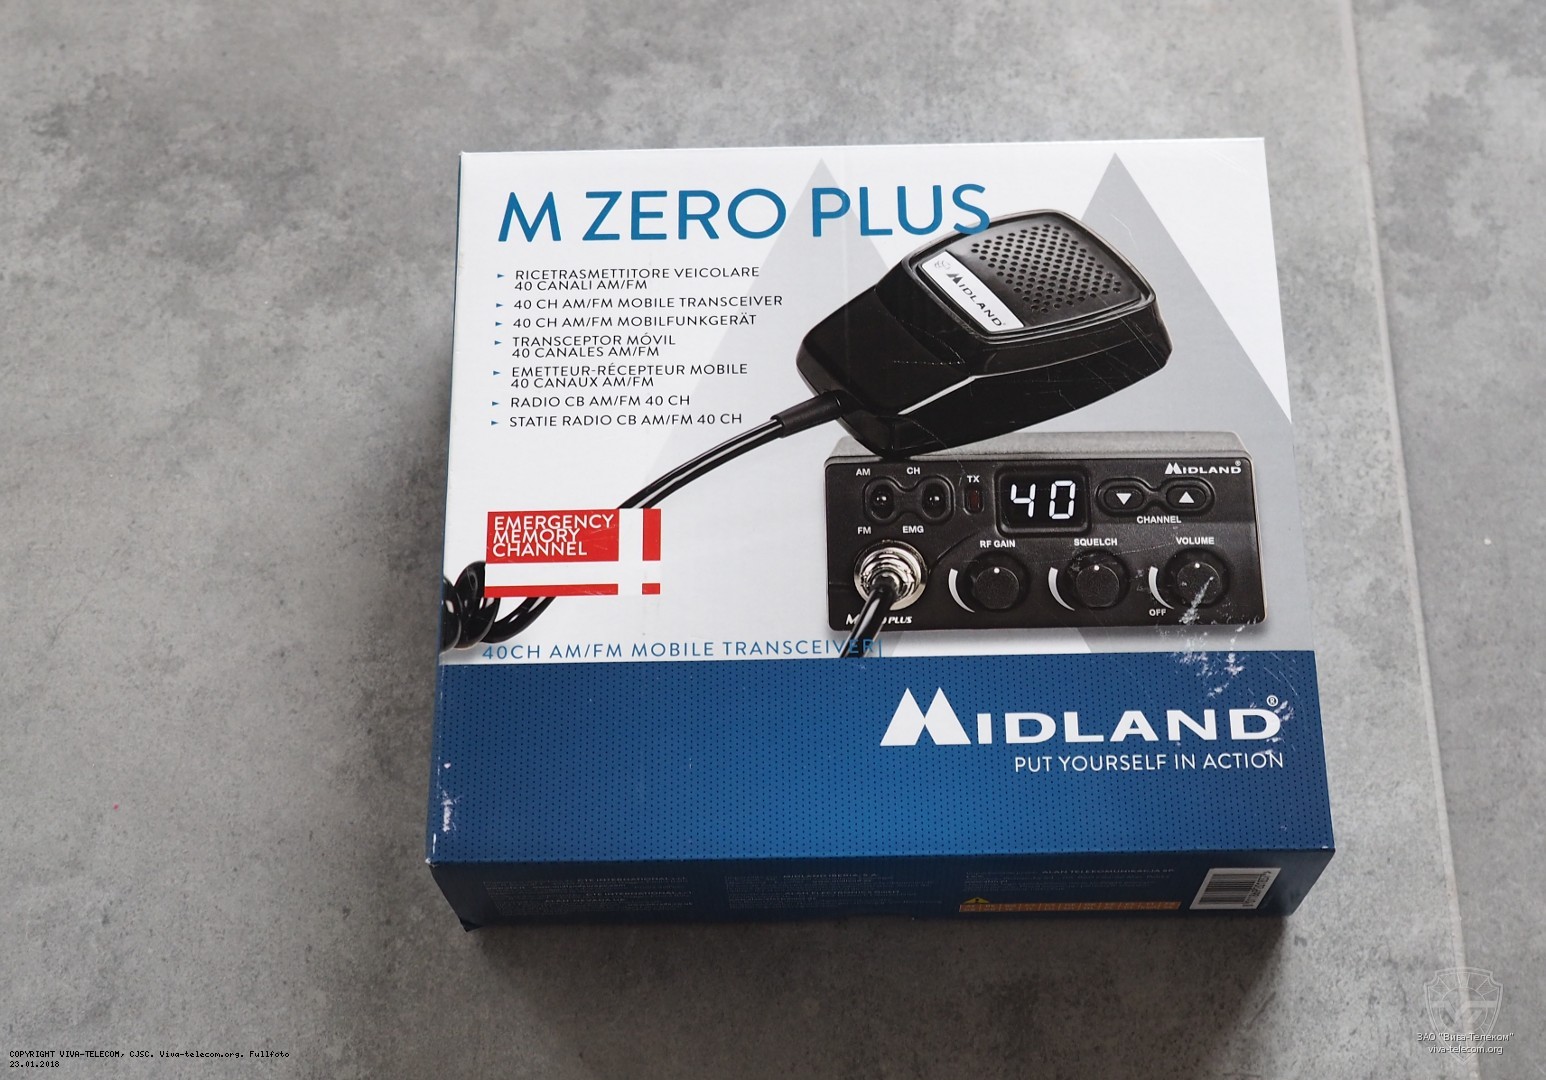    Midland M-Zero Plus